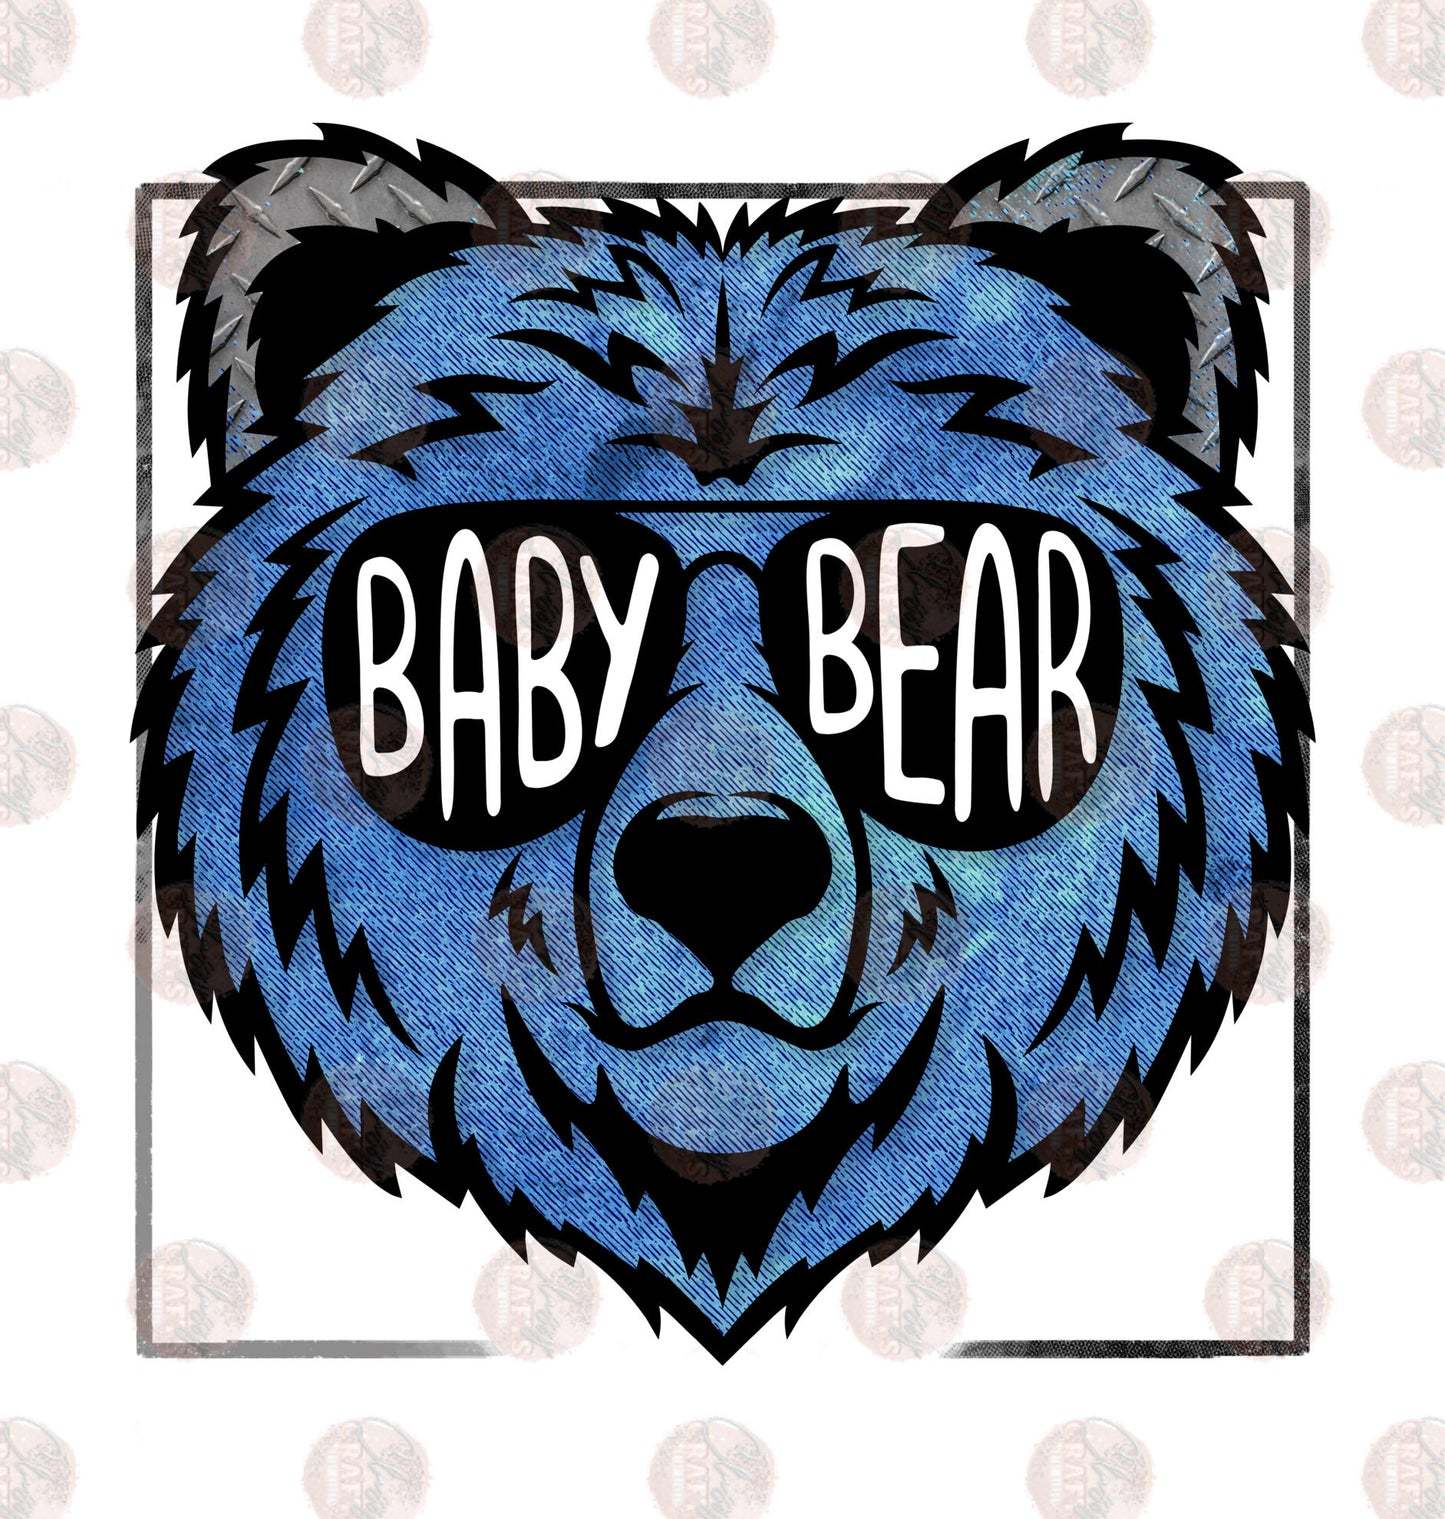 Baby Bear Blue - Sublimation Transfer